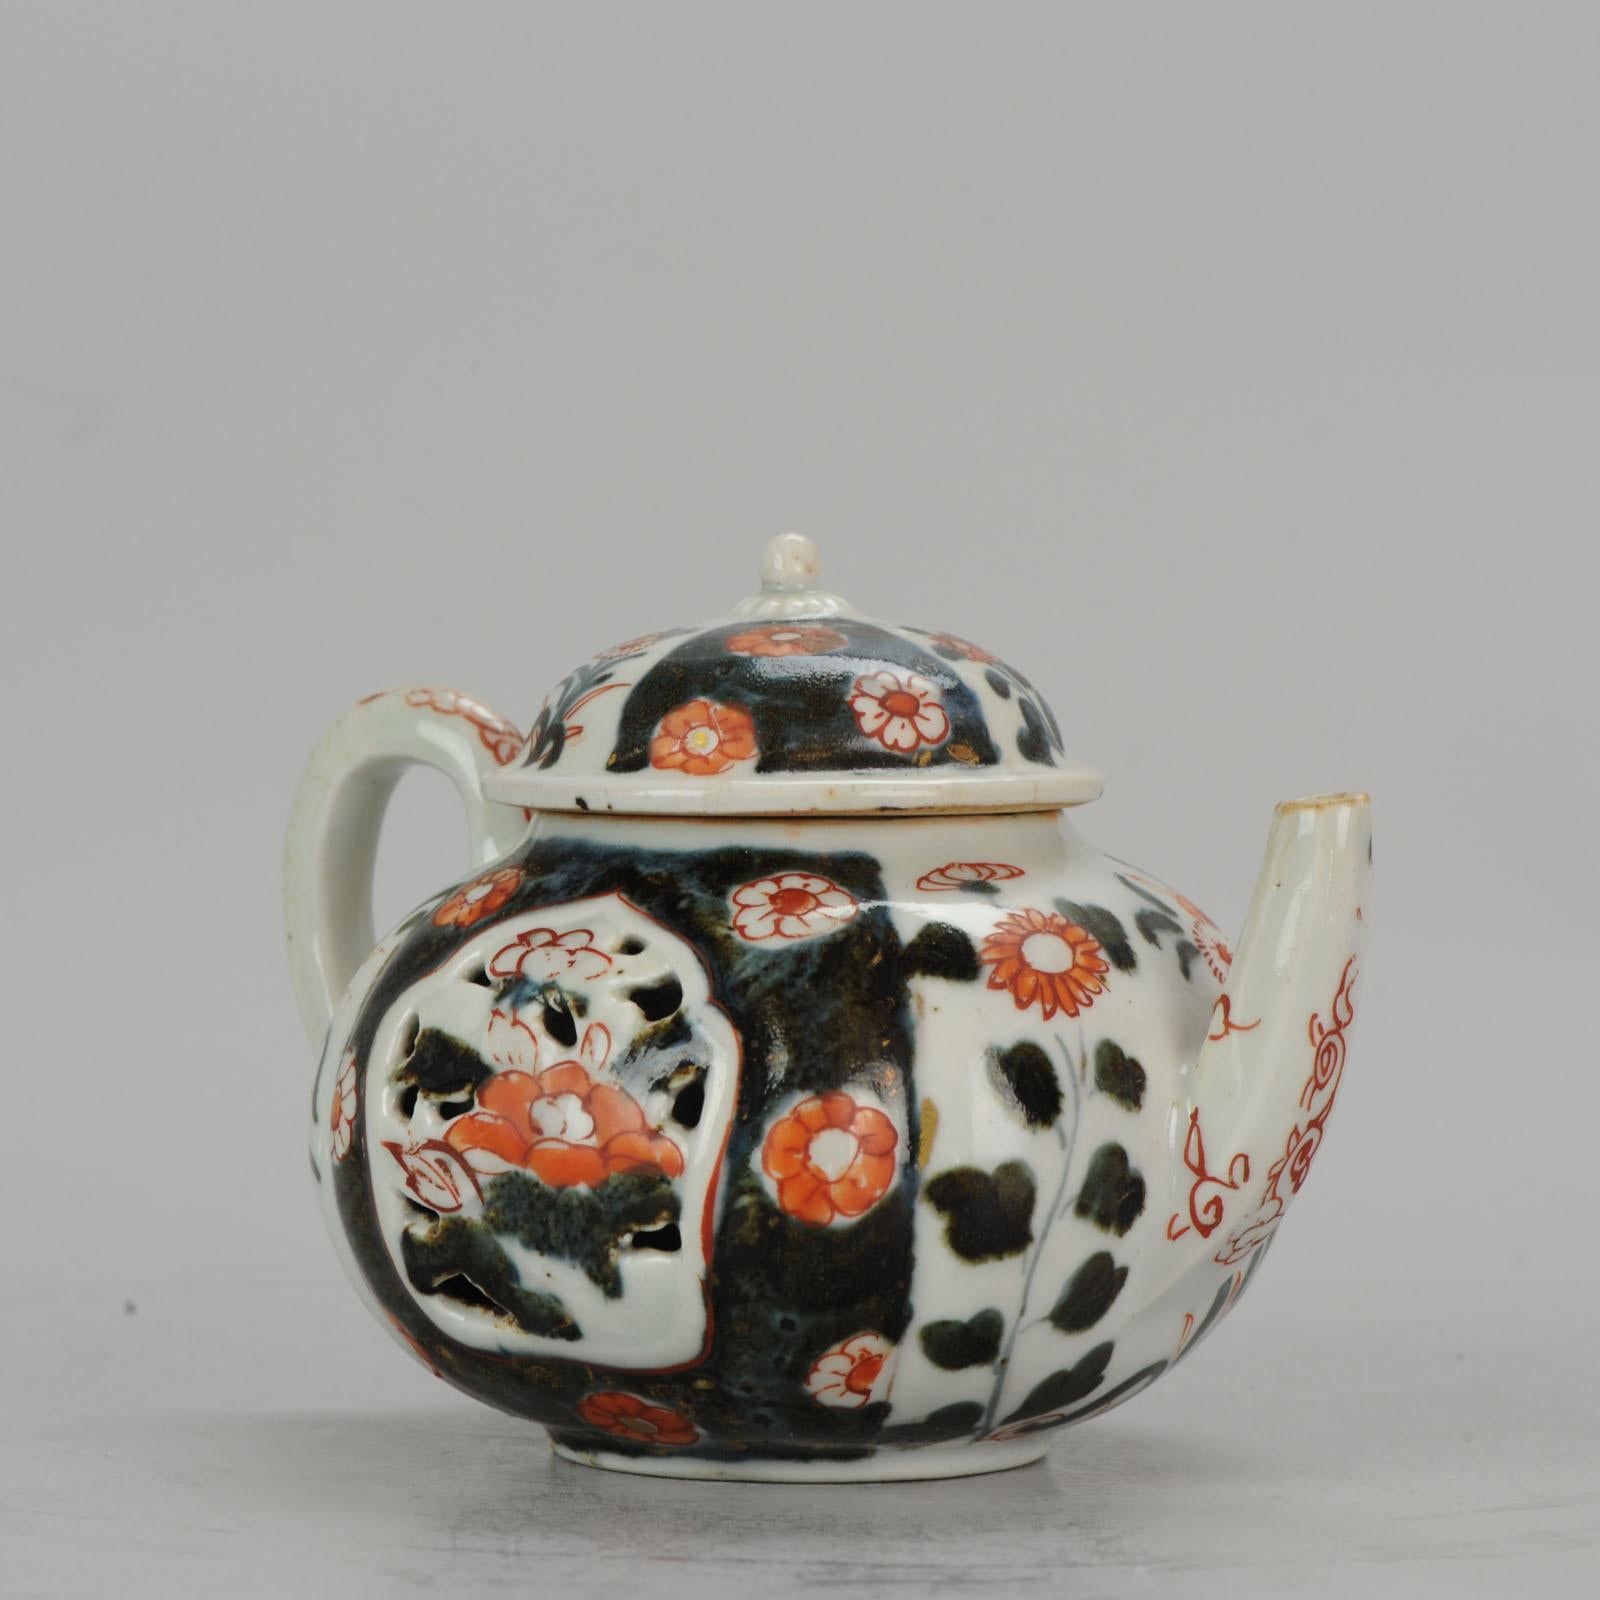 17th Century Antique Rare 1670-1690 Japanese Imari Porcelain Teapot Arita Edo Japan